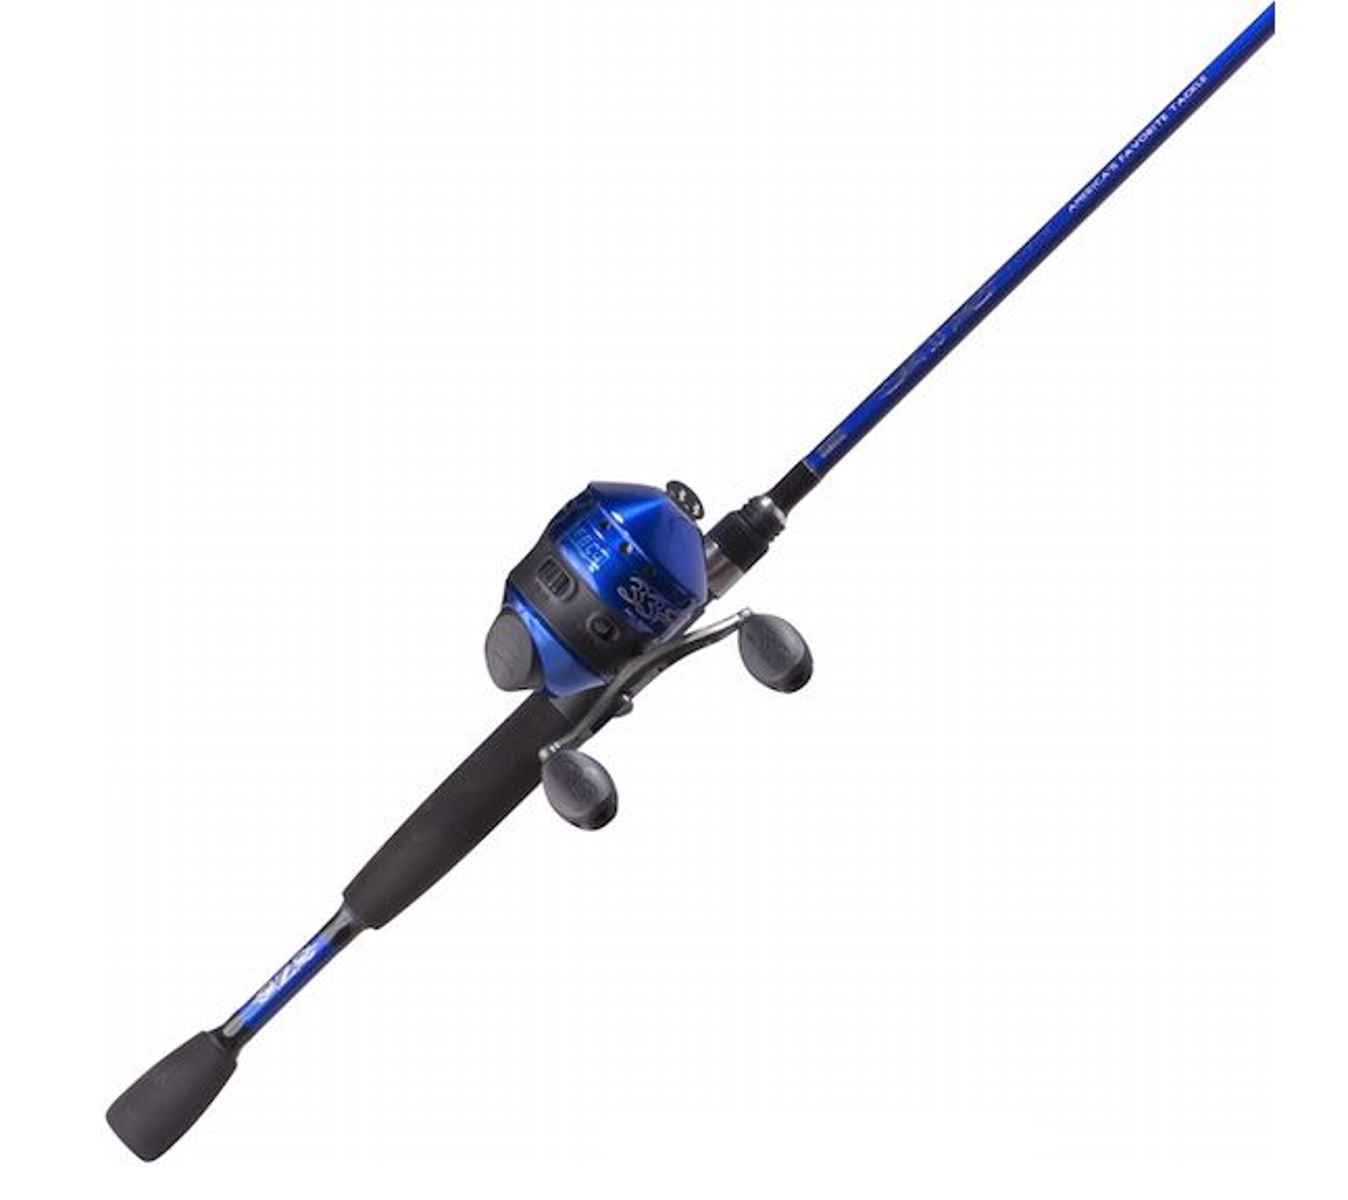 Zebco 33 Tactical Spincast Reel and Fishing Rod Combo – Walmart Inventory  Checker – BrickSeek